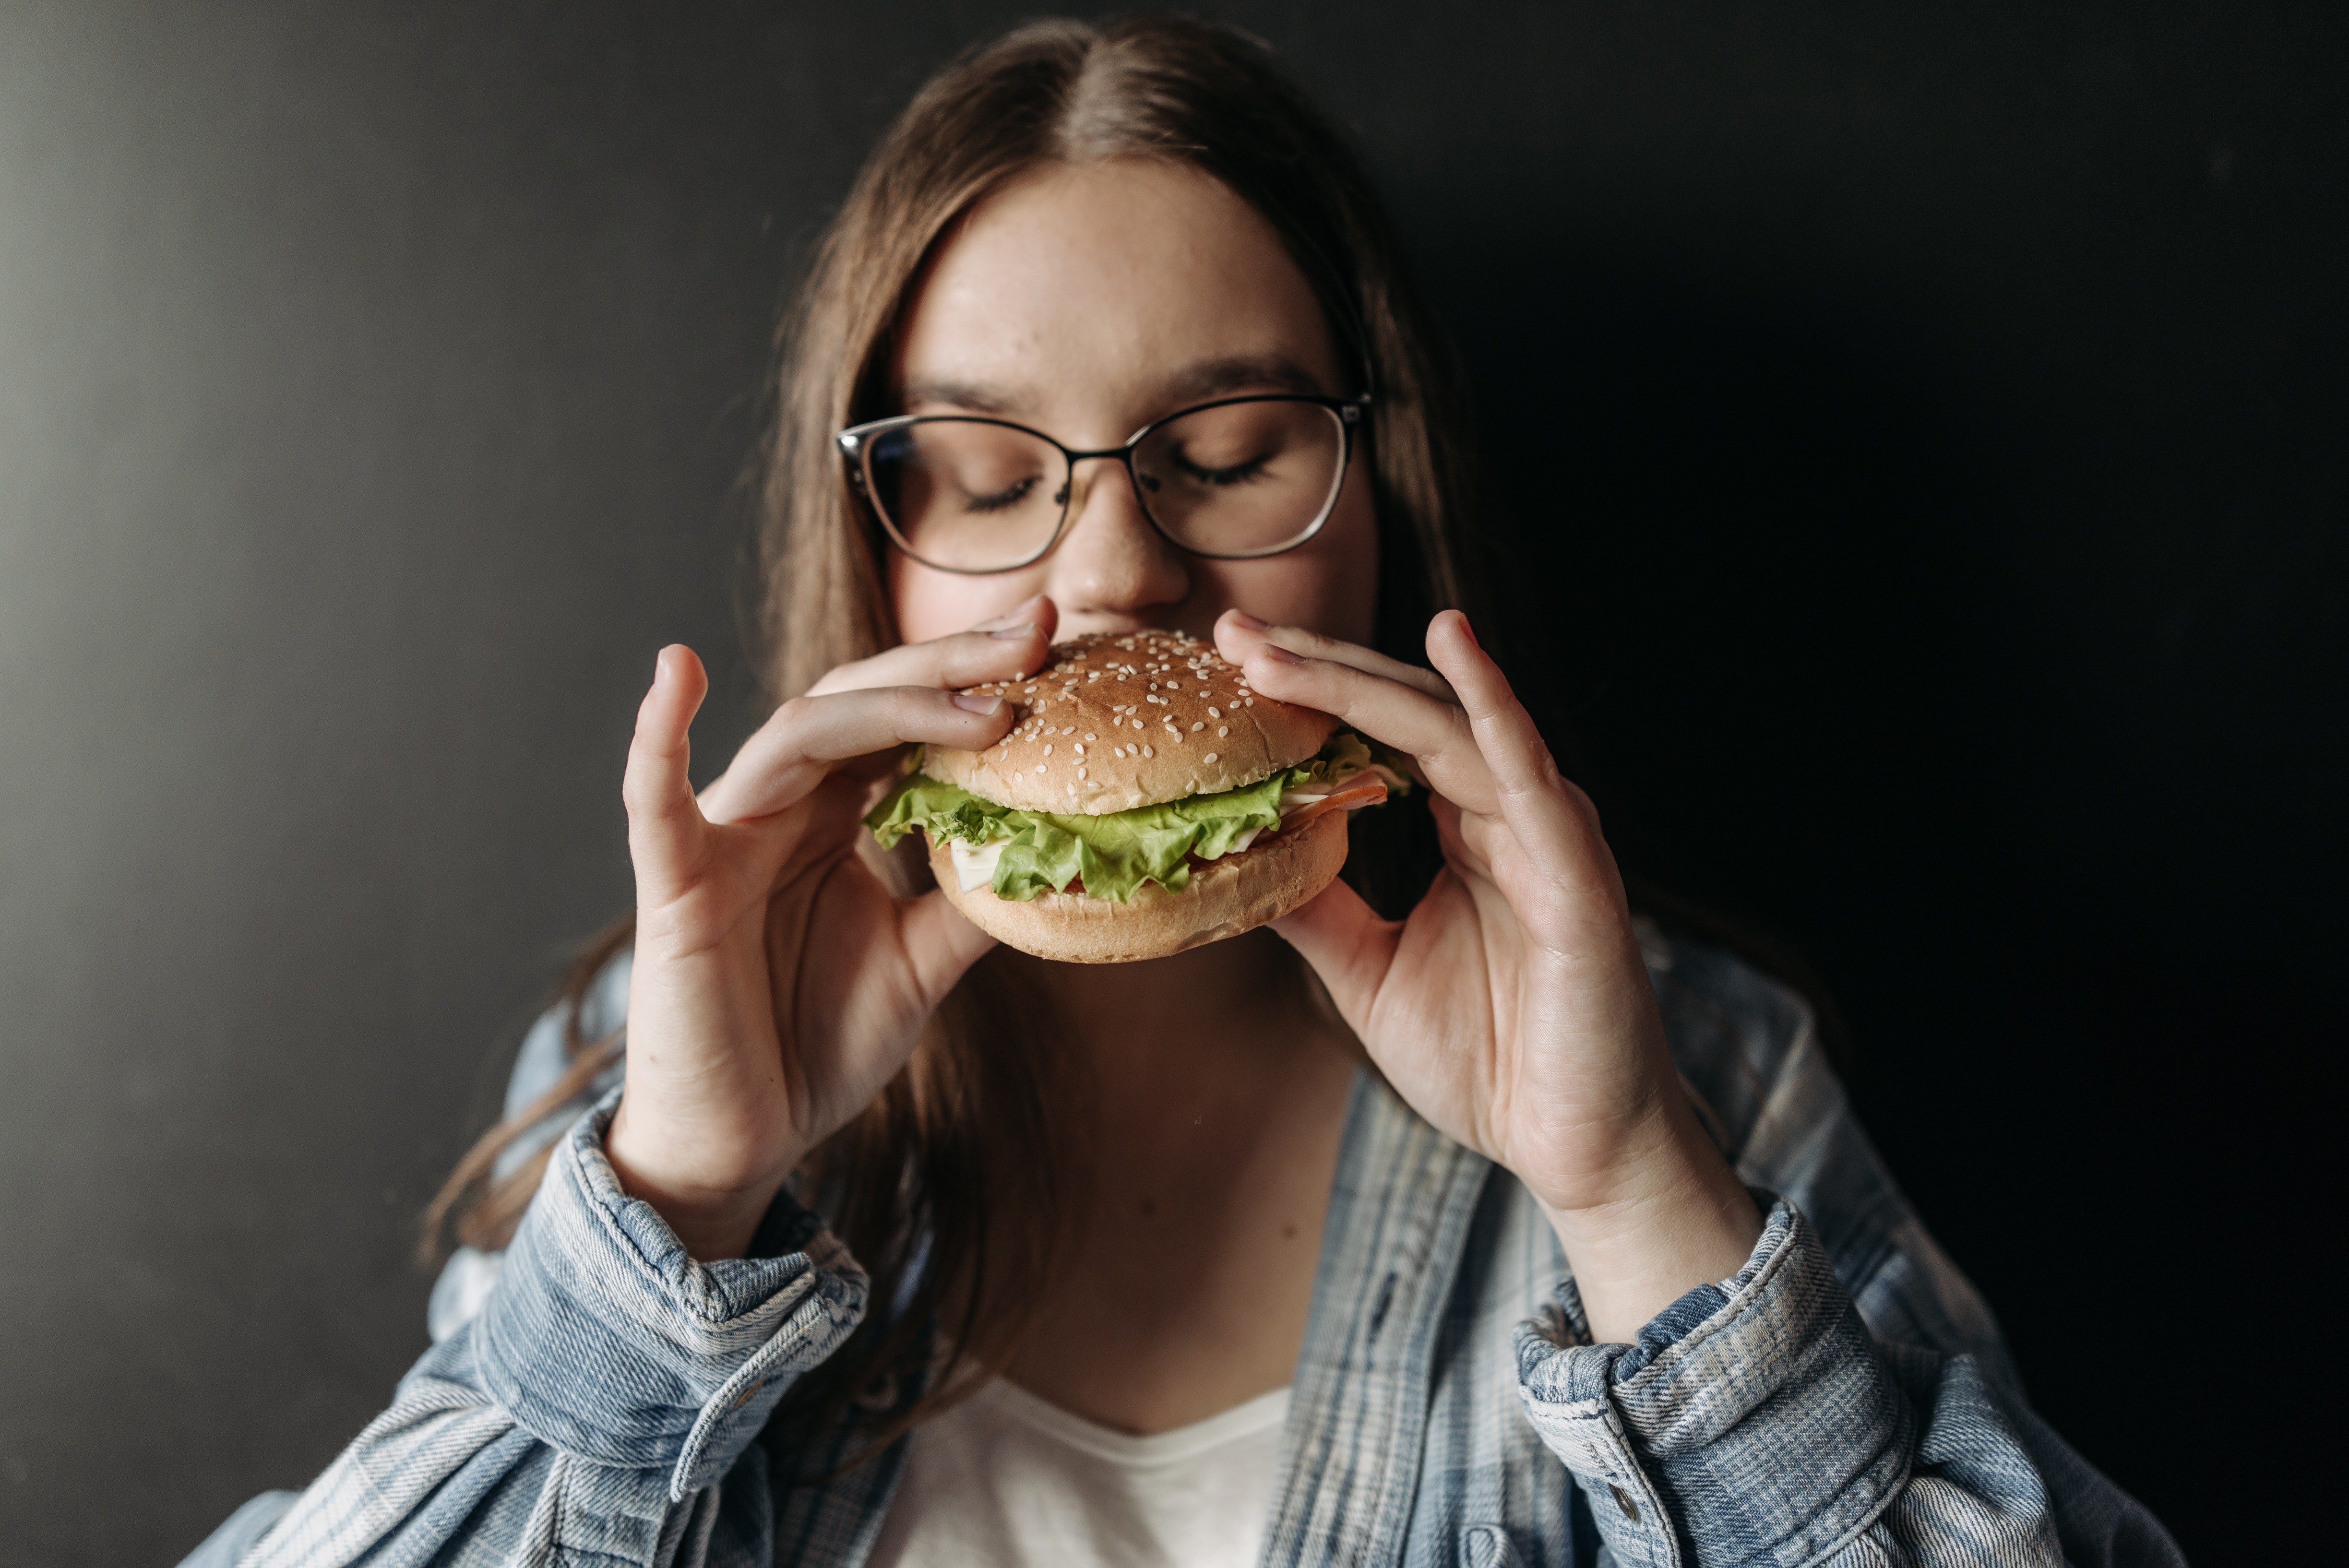 Adolescente comendo hamburguer (Foto: Pavel Danilyuk/Pexels)